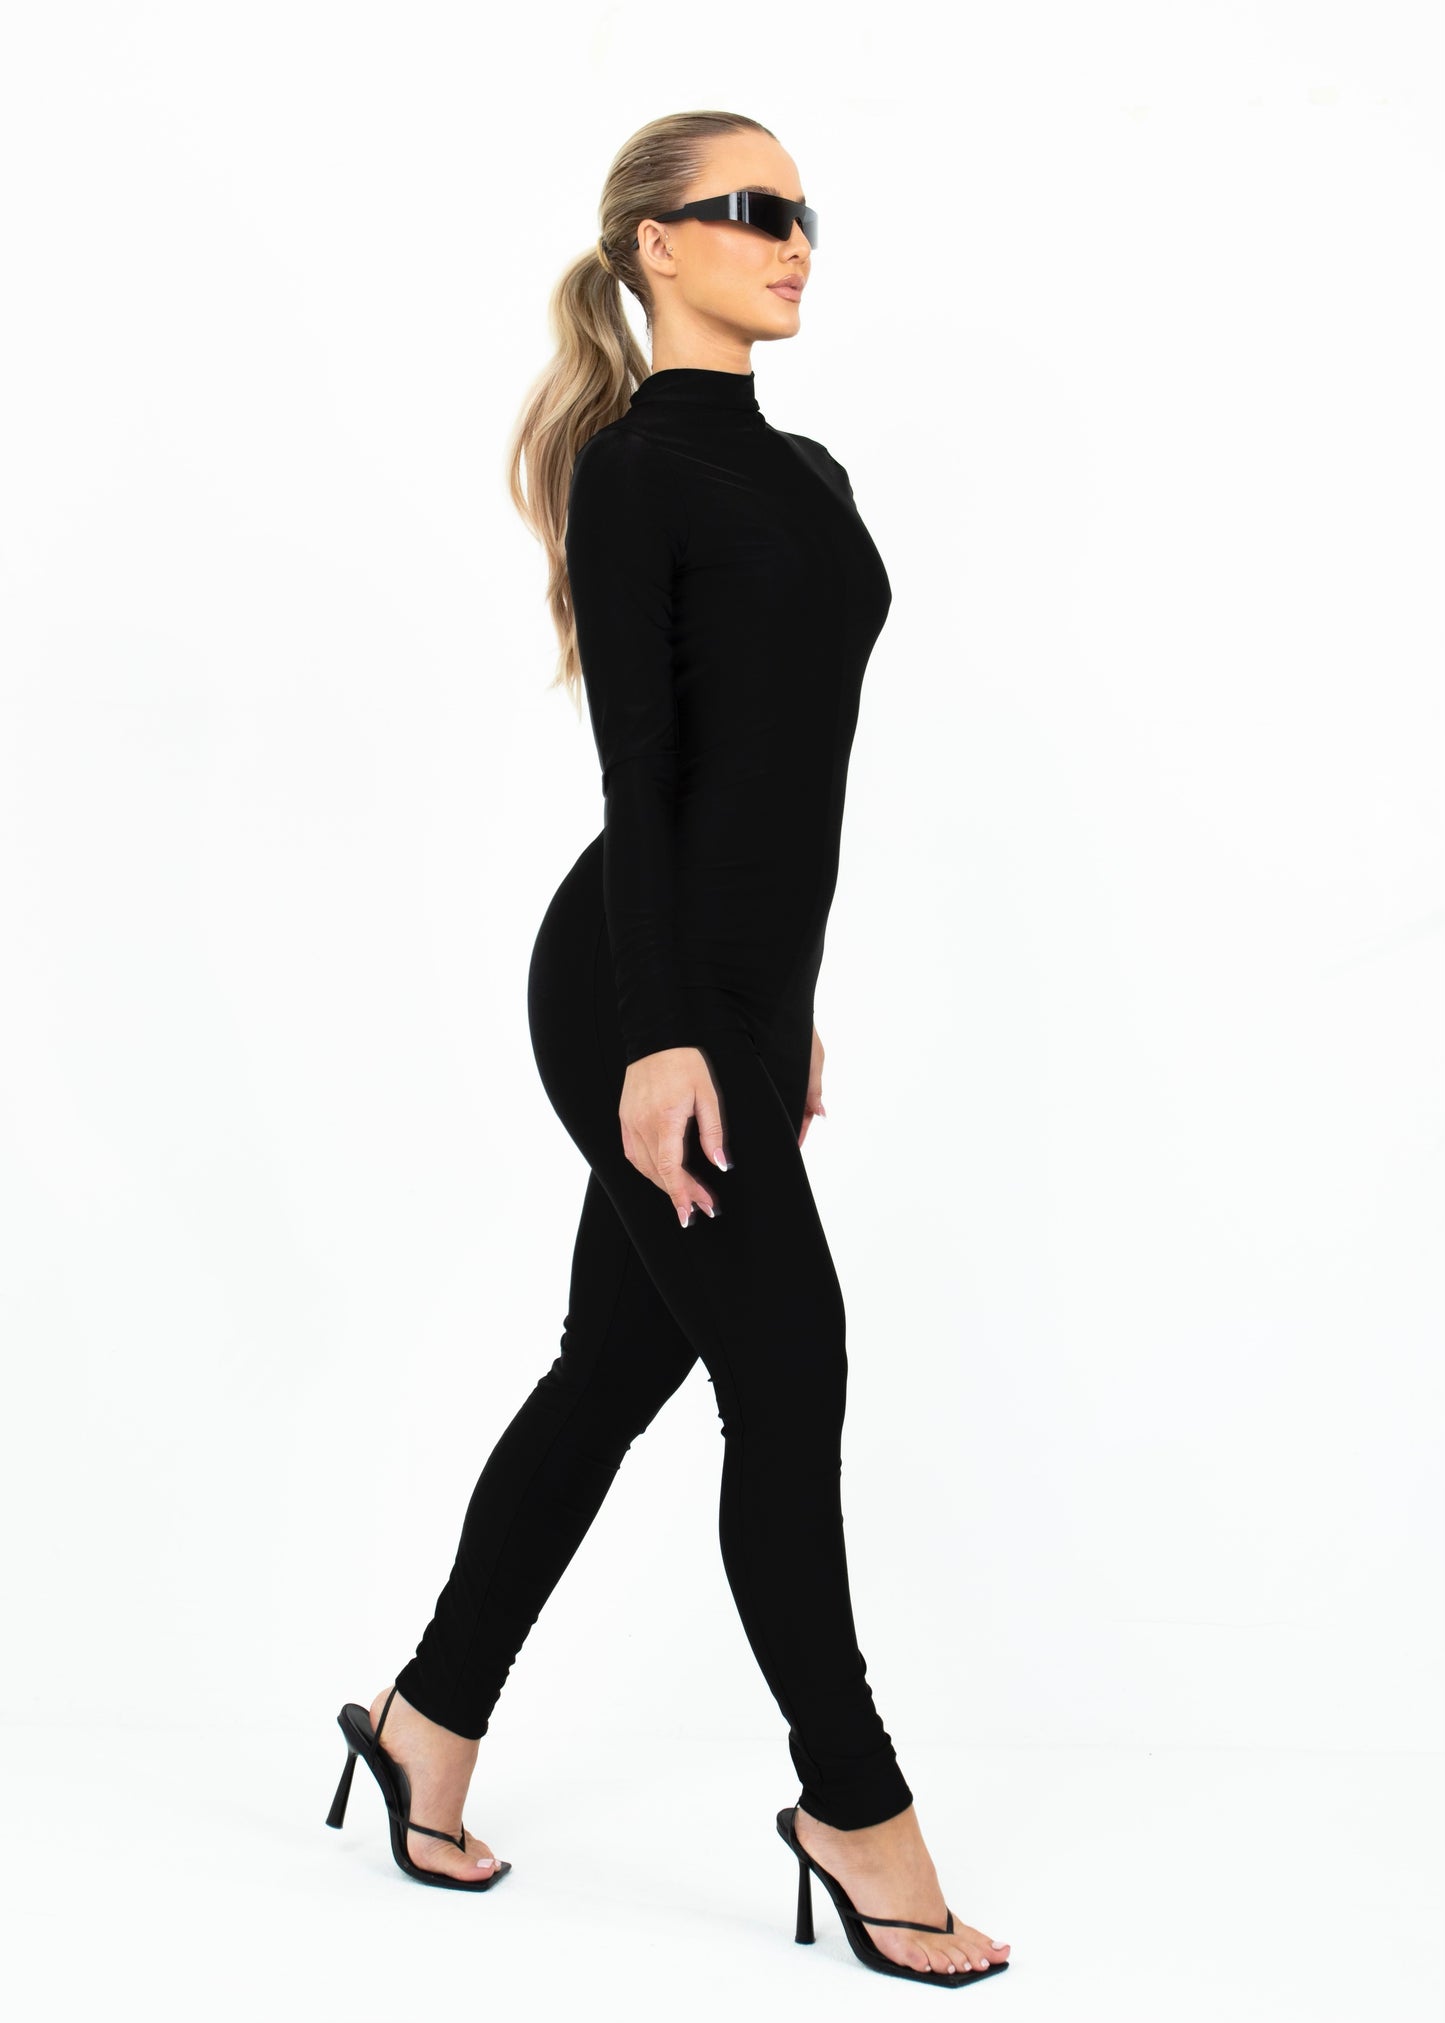 GRACE - Black Jumpsuit Long Sleeves